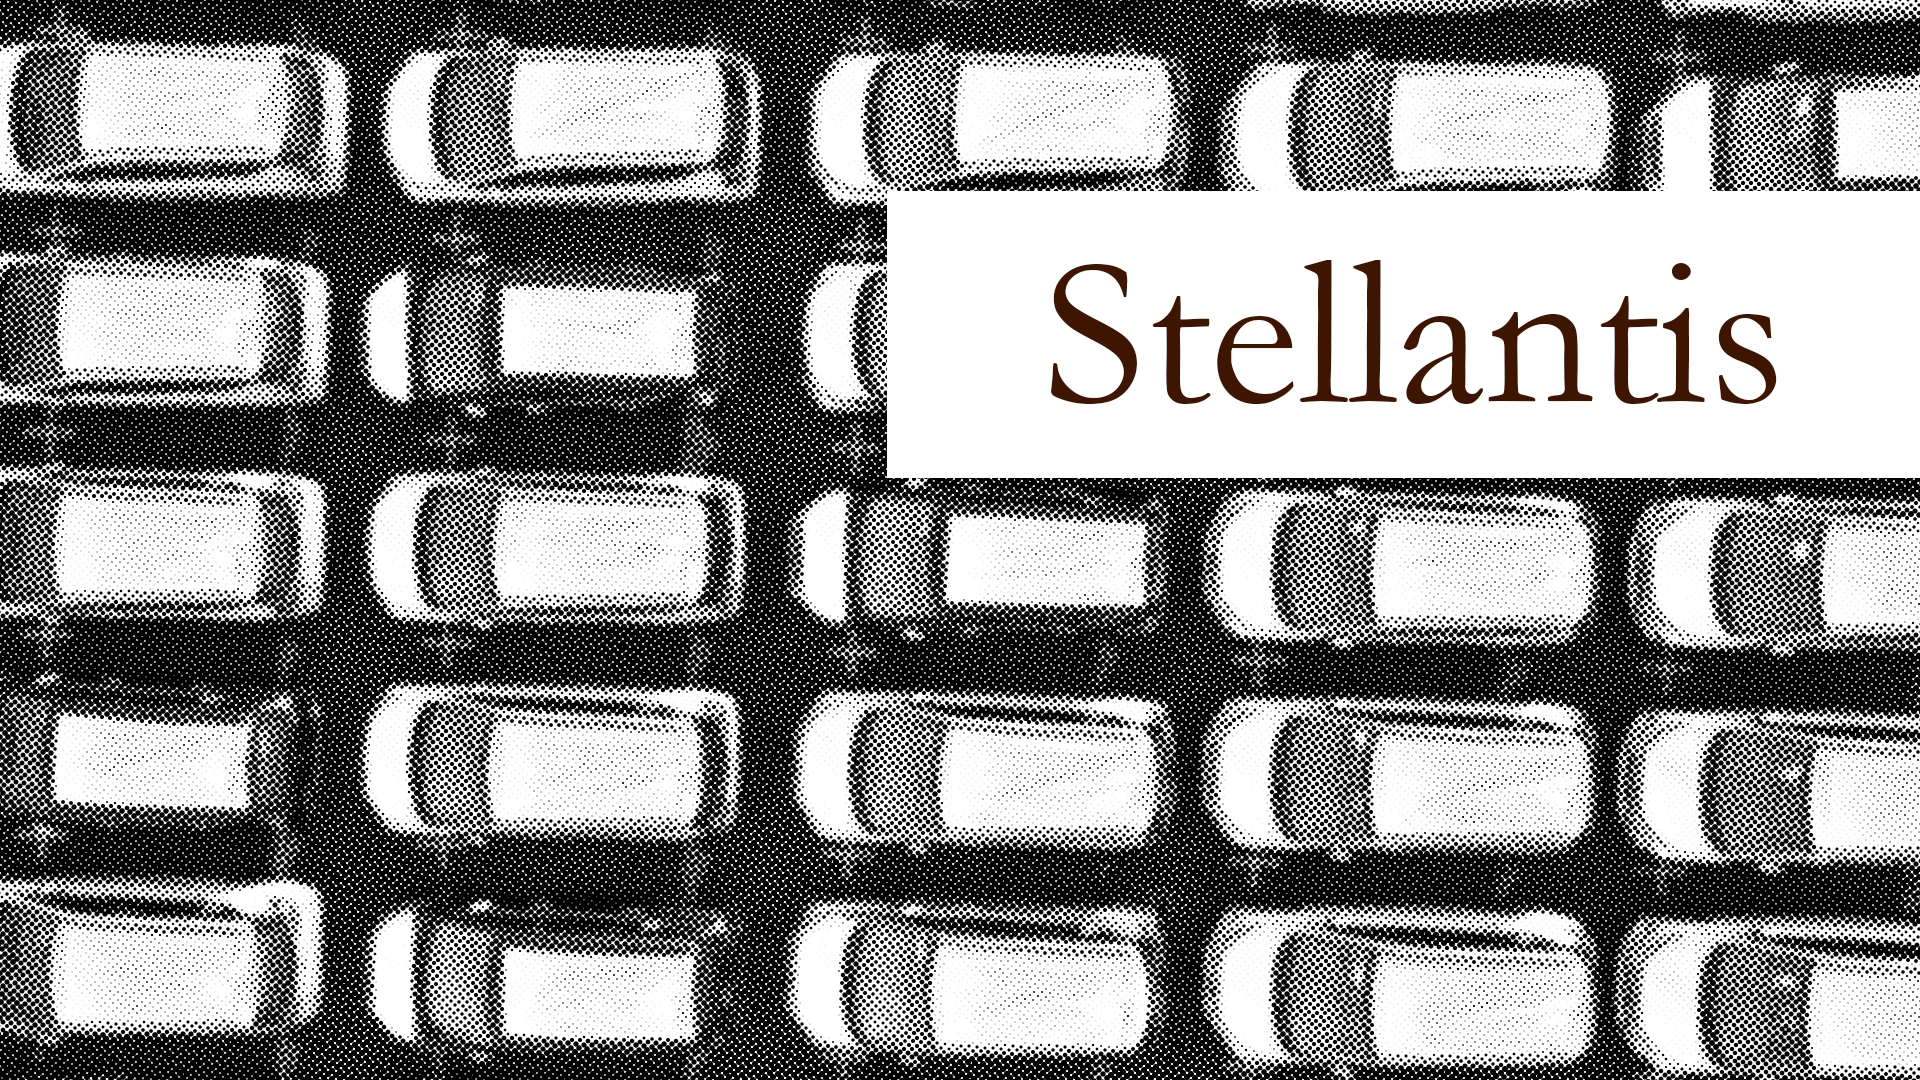 Stellantis -  a well-performing car manufacturer